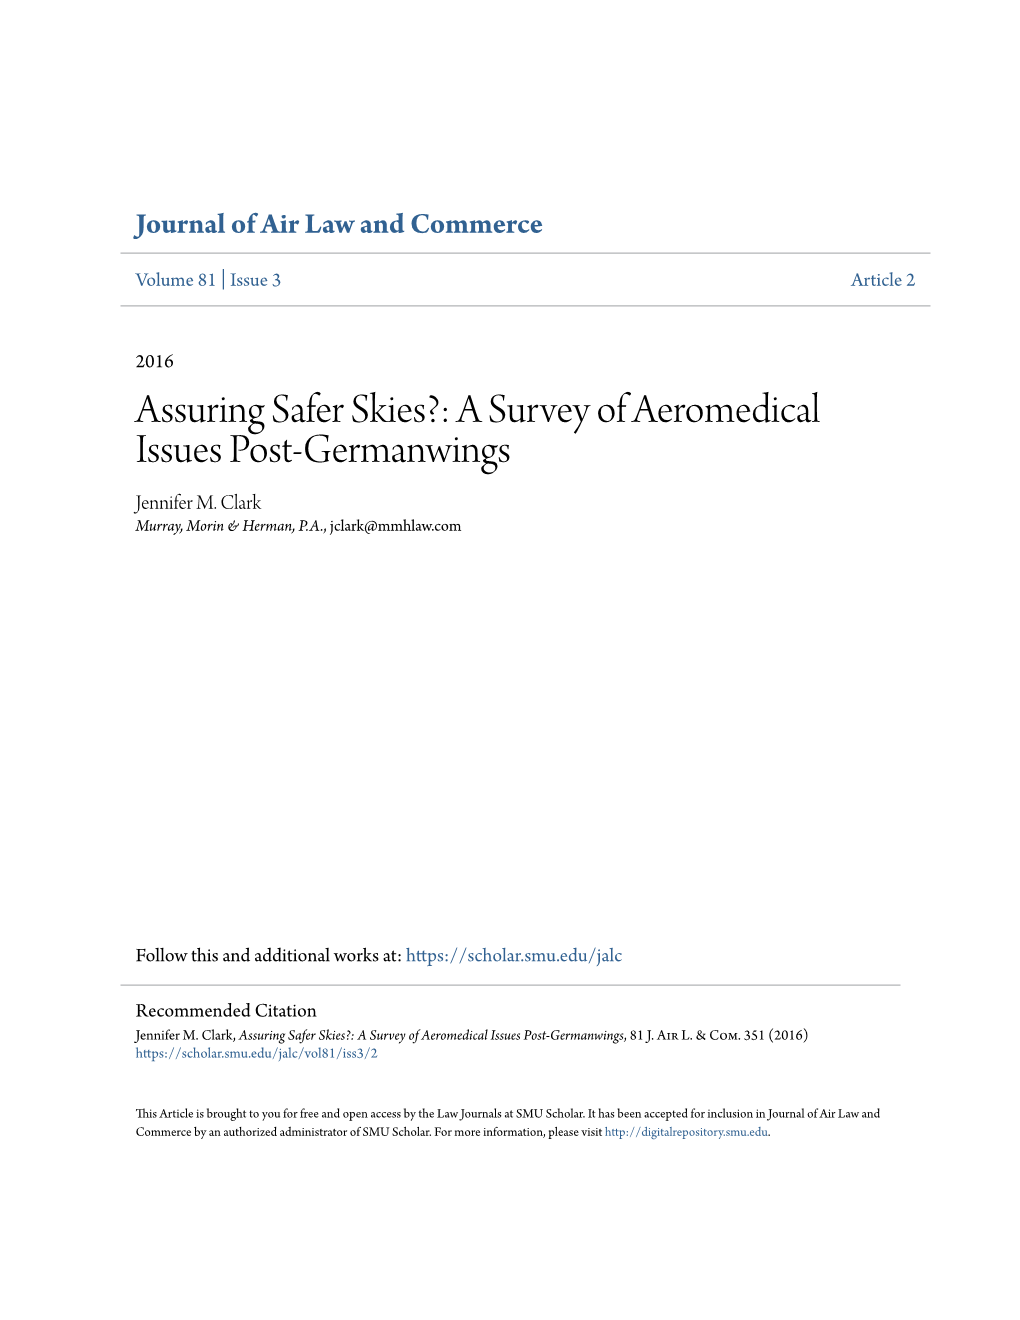 A Survey of Aeromedical Issues Post-Germanwings Jennifer M